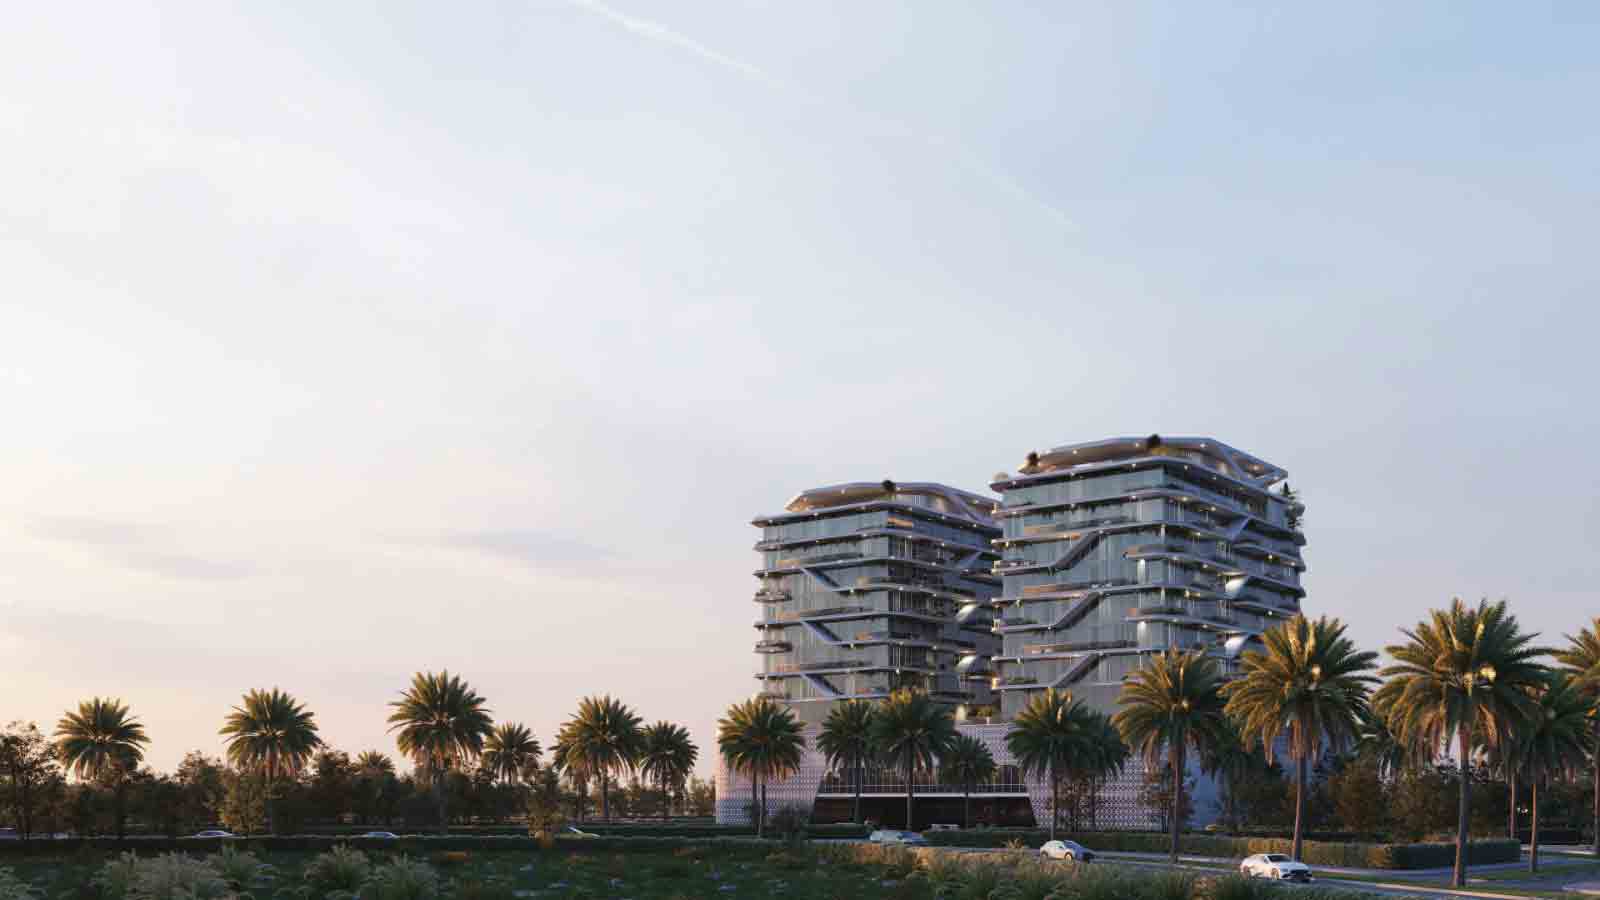 Furnished flats on an island in Dubai